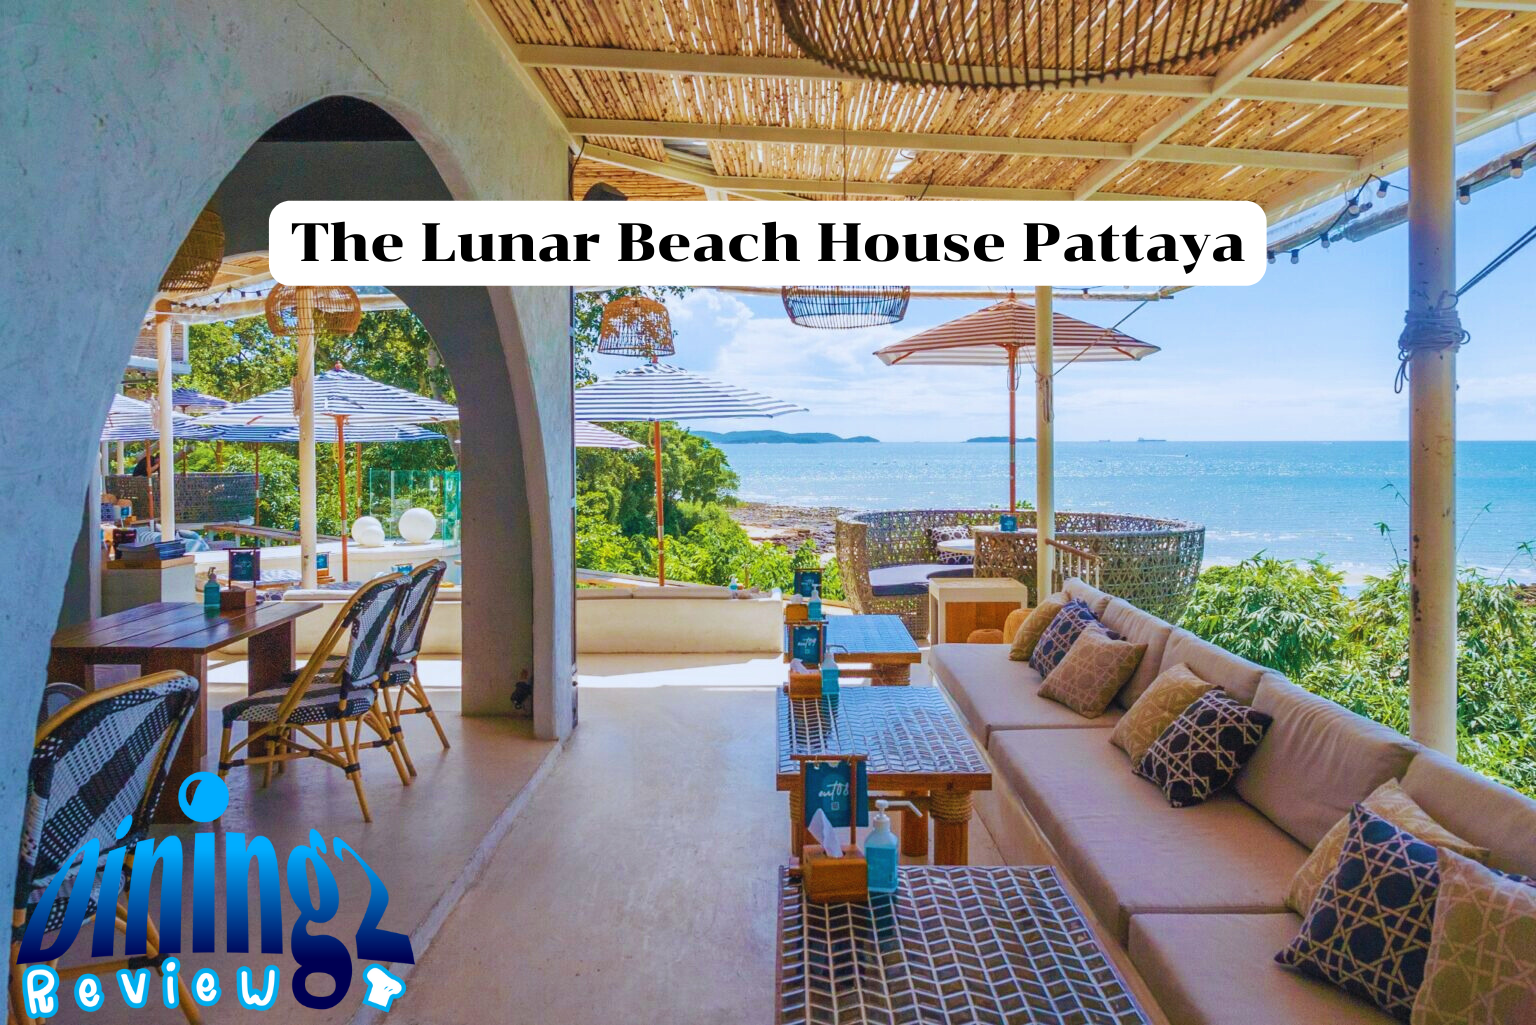 The Lunar Beach House Pattaya